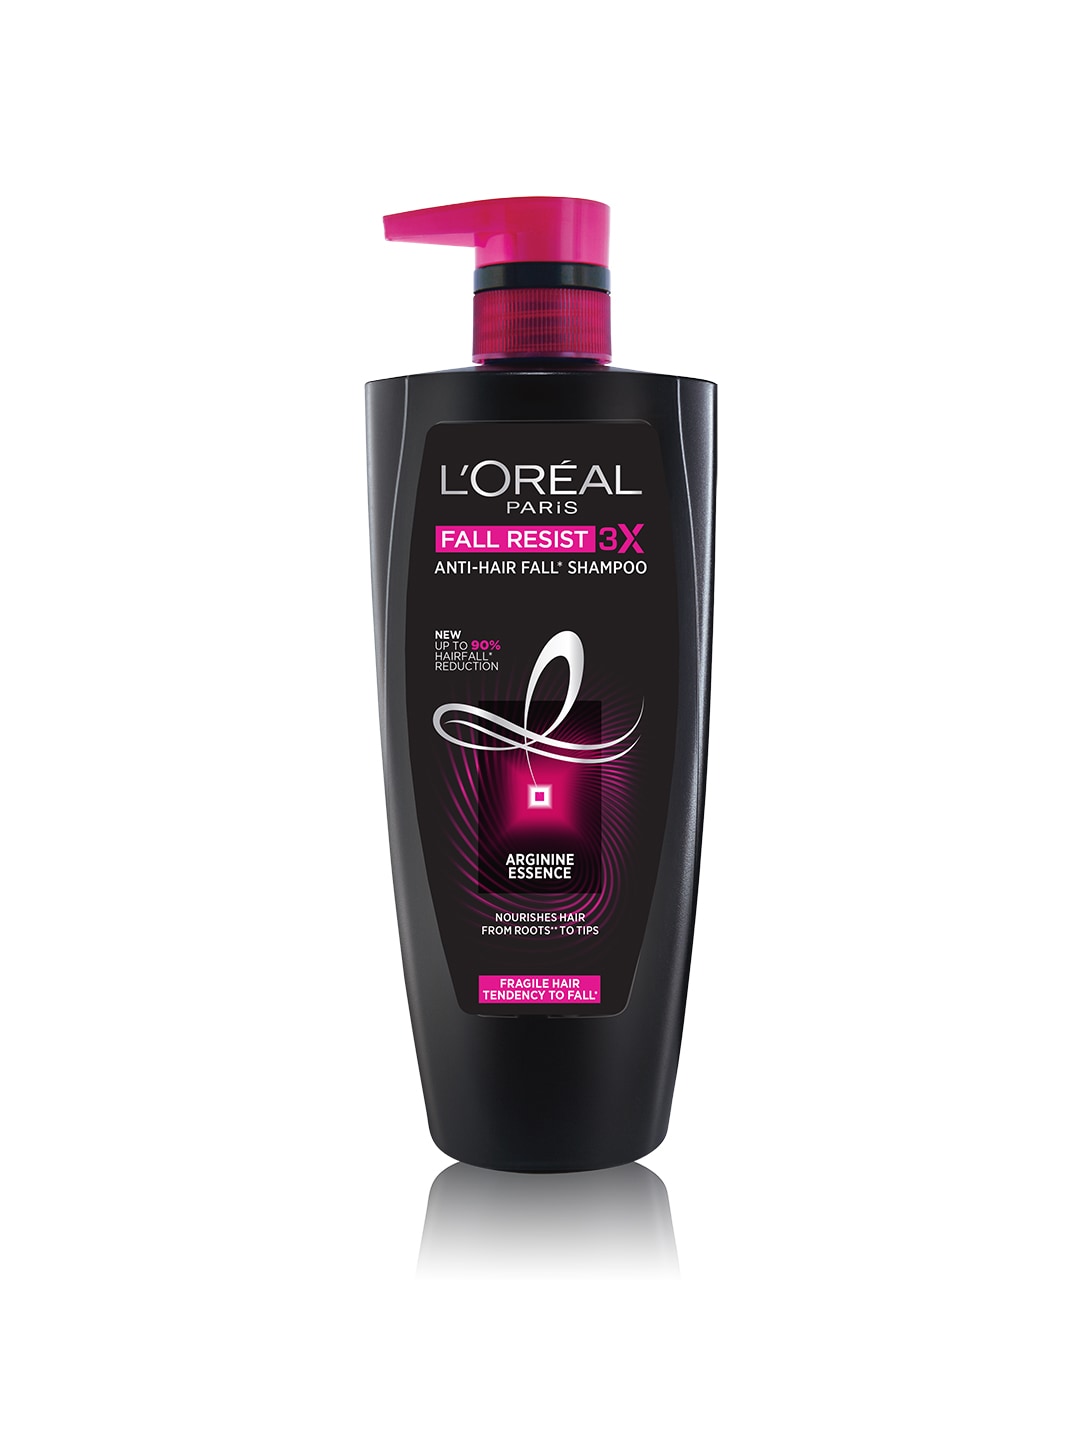 LOreal Paris Fall Resist 3x Anti-Hair Fall Shampoo 704 ml Price in India